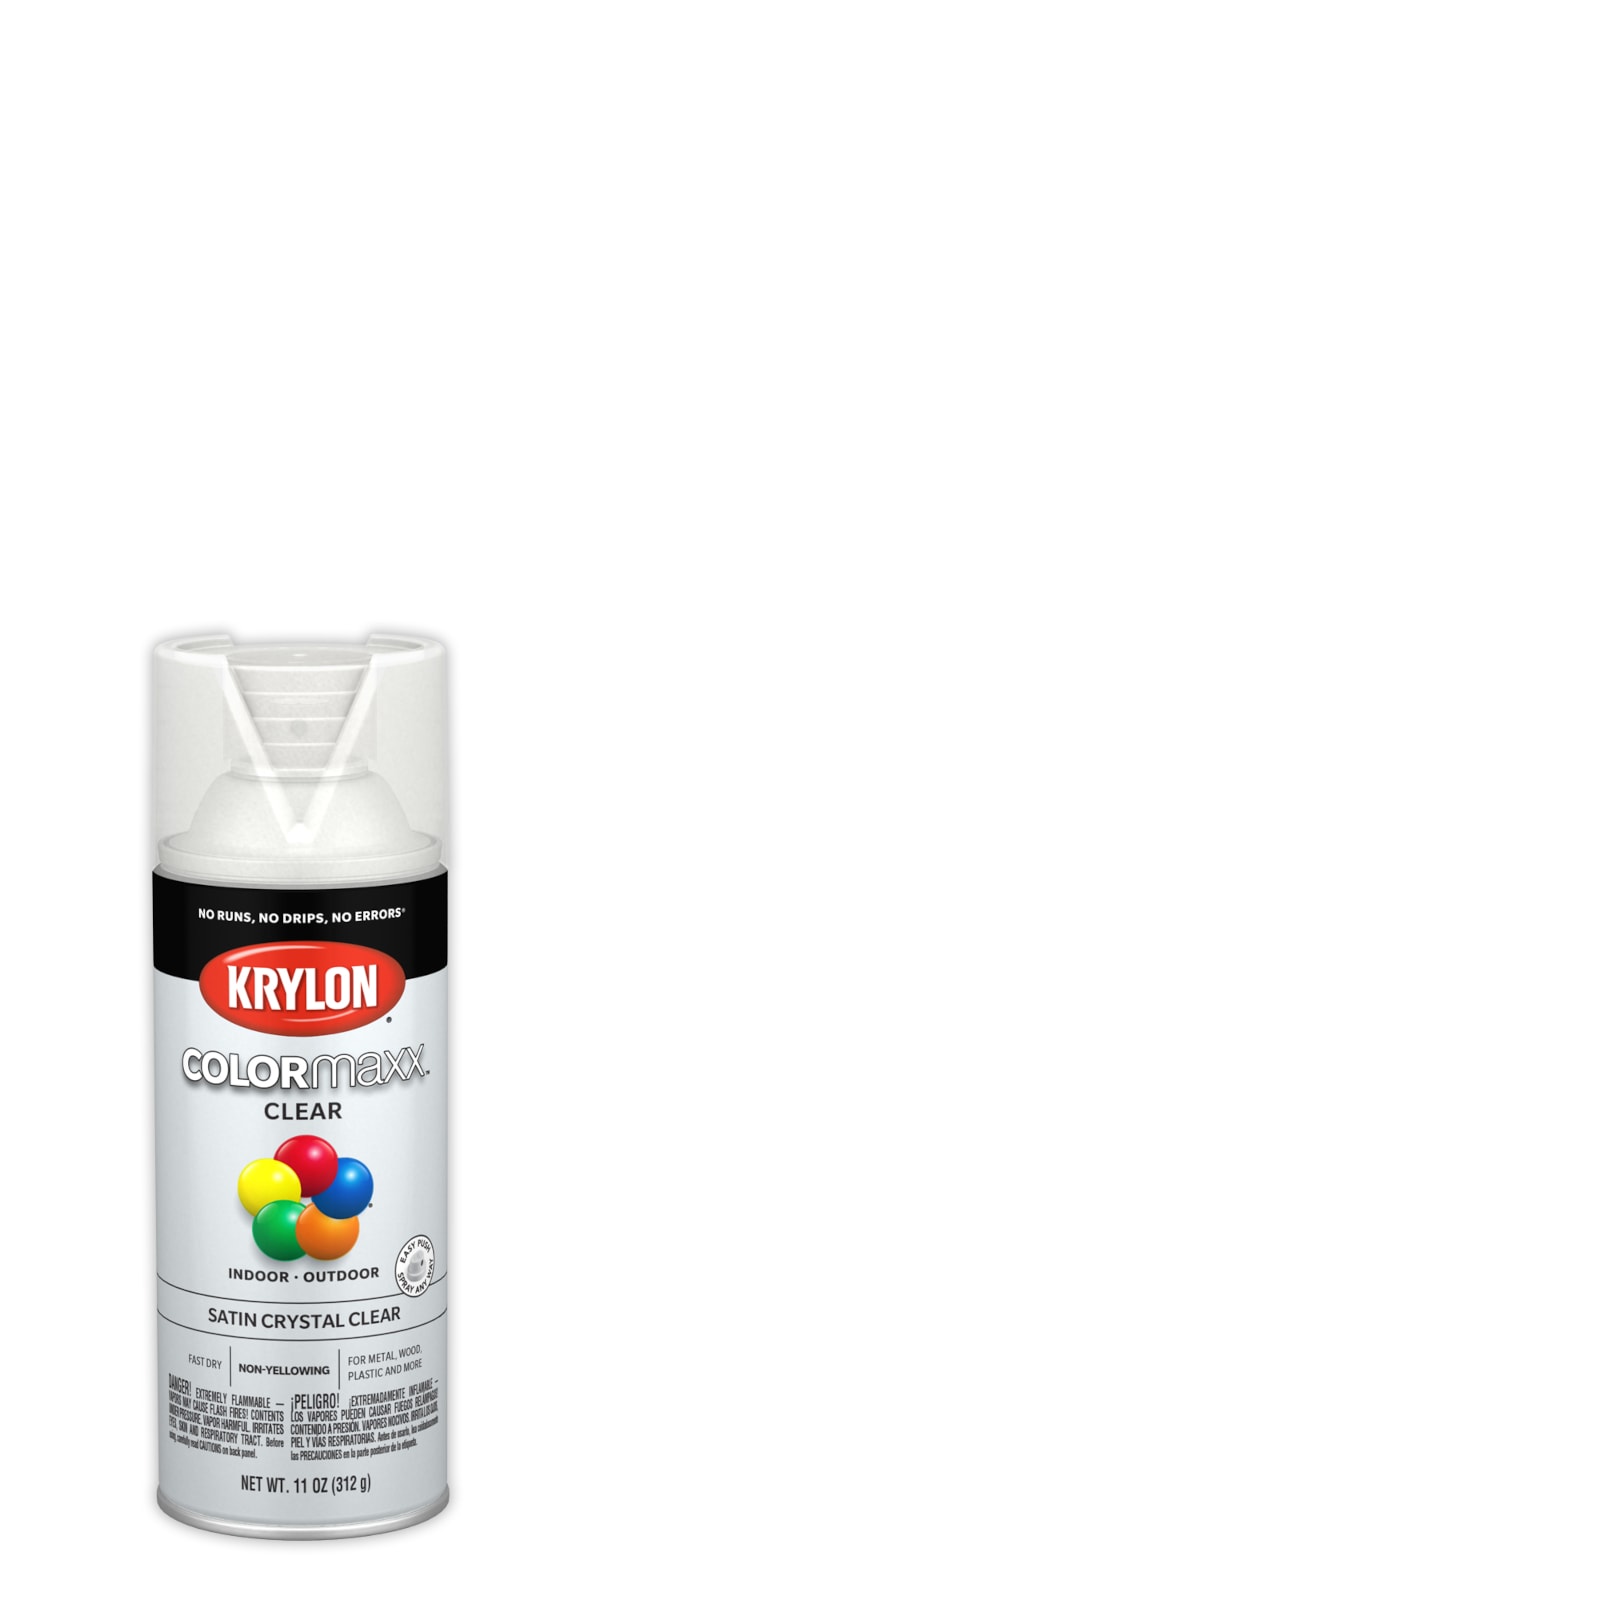 Krylon® ColorMaxx™ Acrylic Gloss White Latex Paint, 8 fl oz - Foods Co.